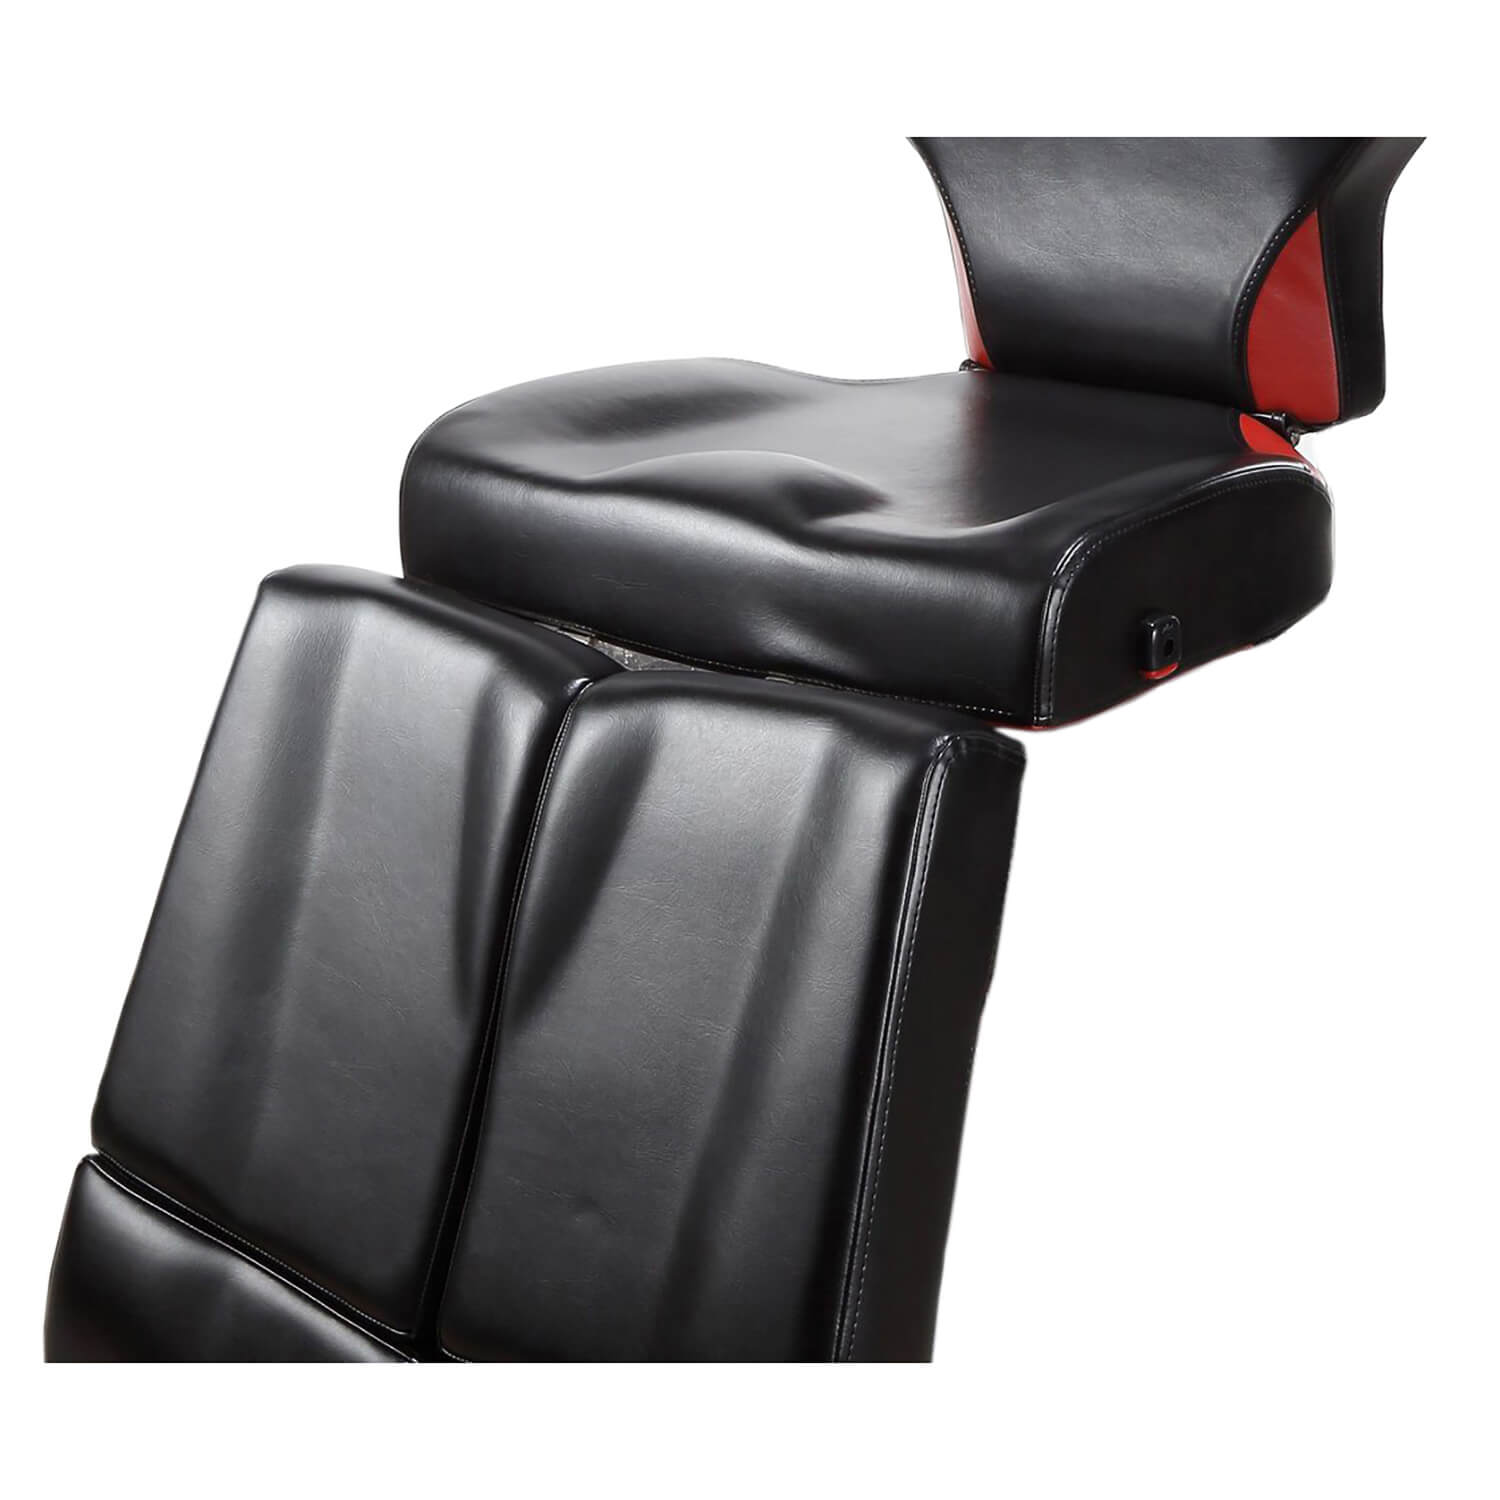 570 Cushion Upgrade (RED)